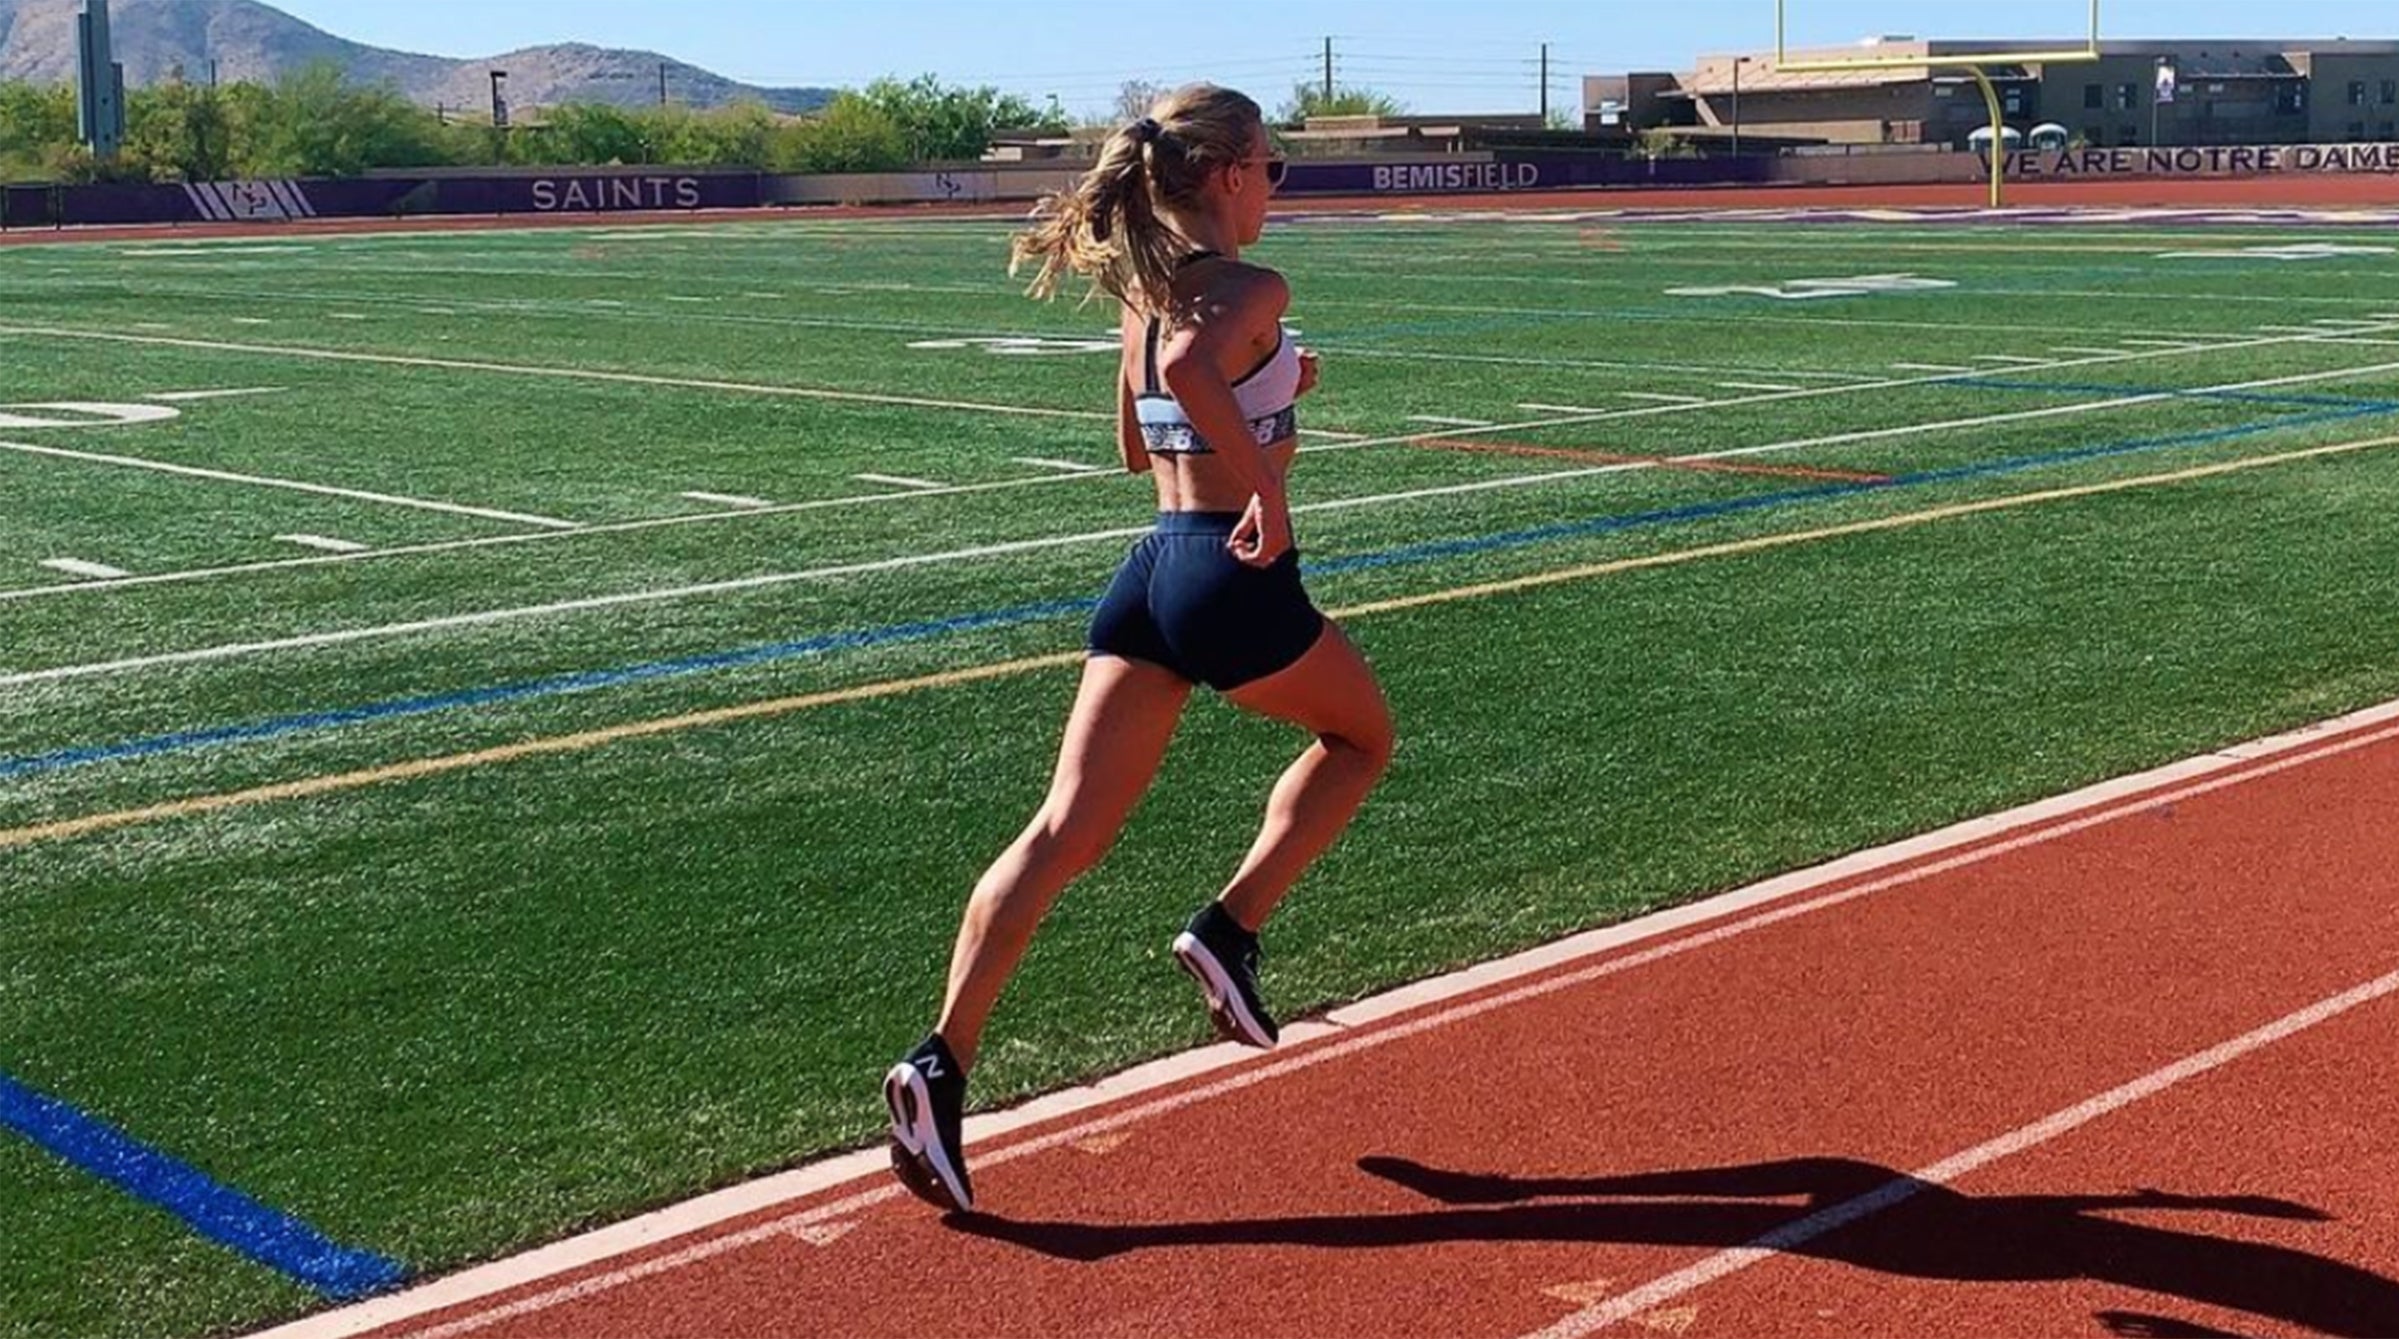 I followed world's strongest girl her leg workout 😅